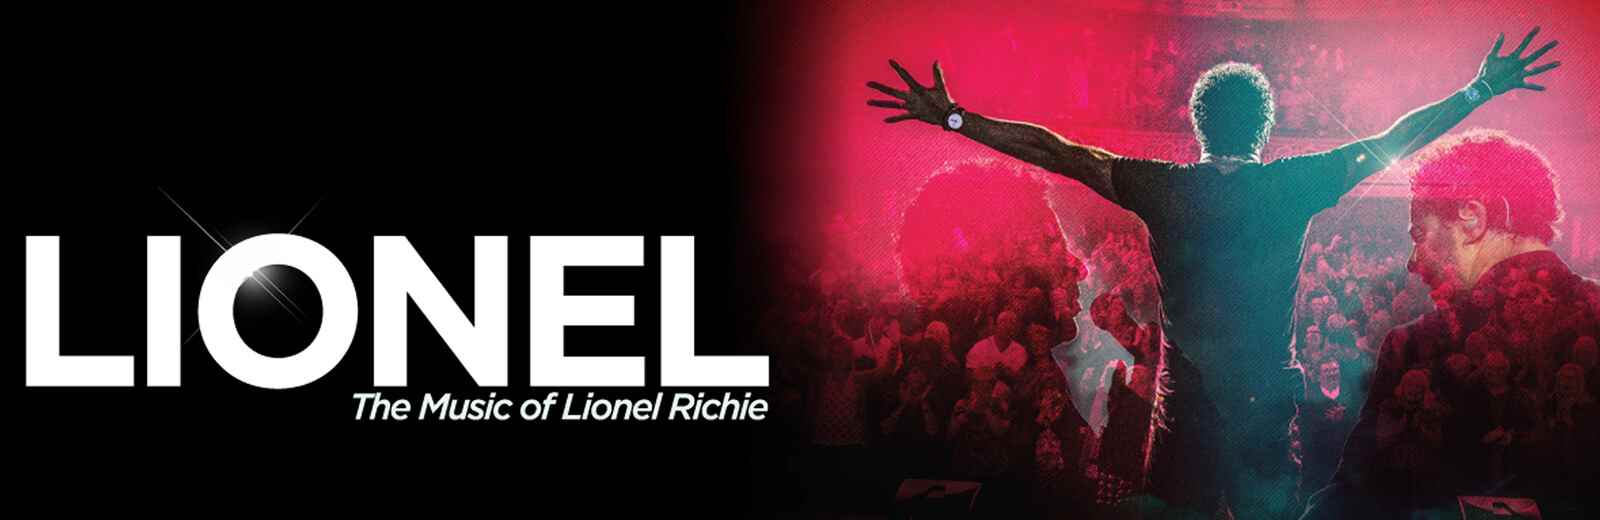 Lionel - the Music of Lionel Richie